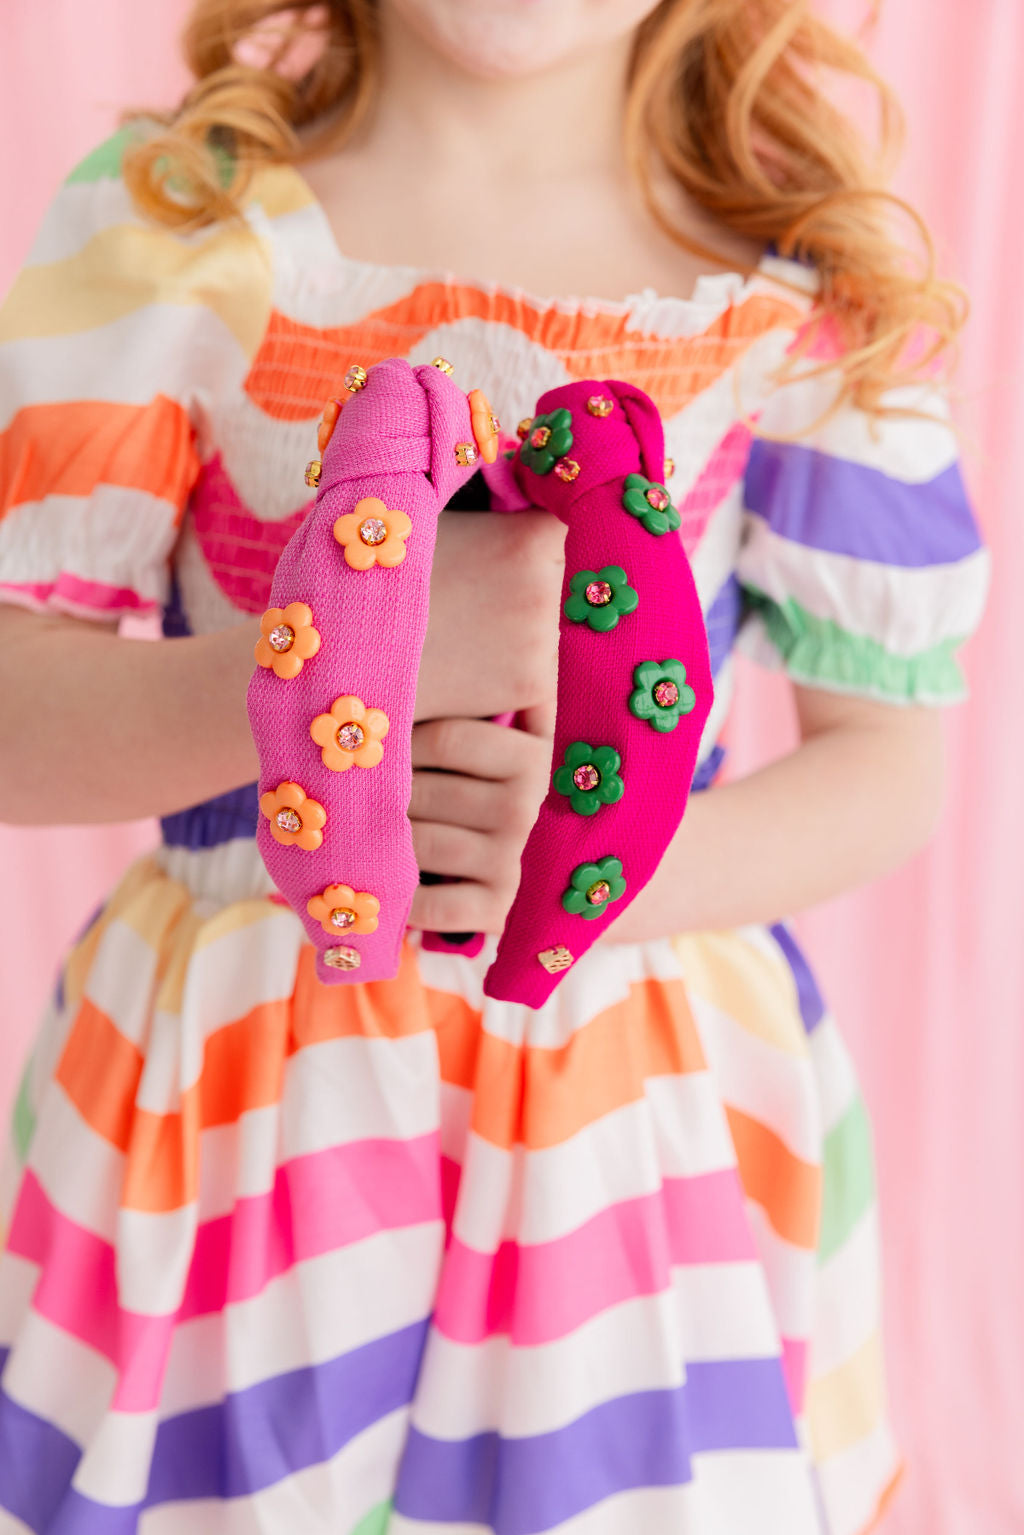 Child Size Bubble Gum Pink Headband with Orange Flowers